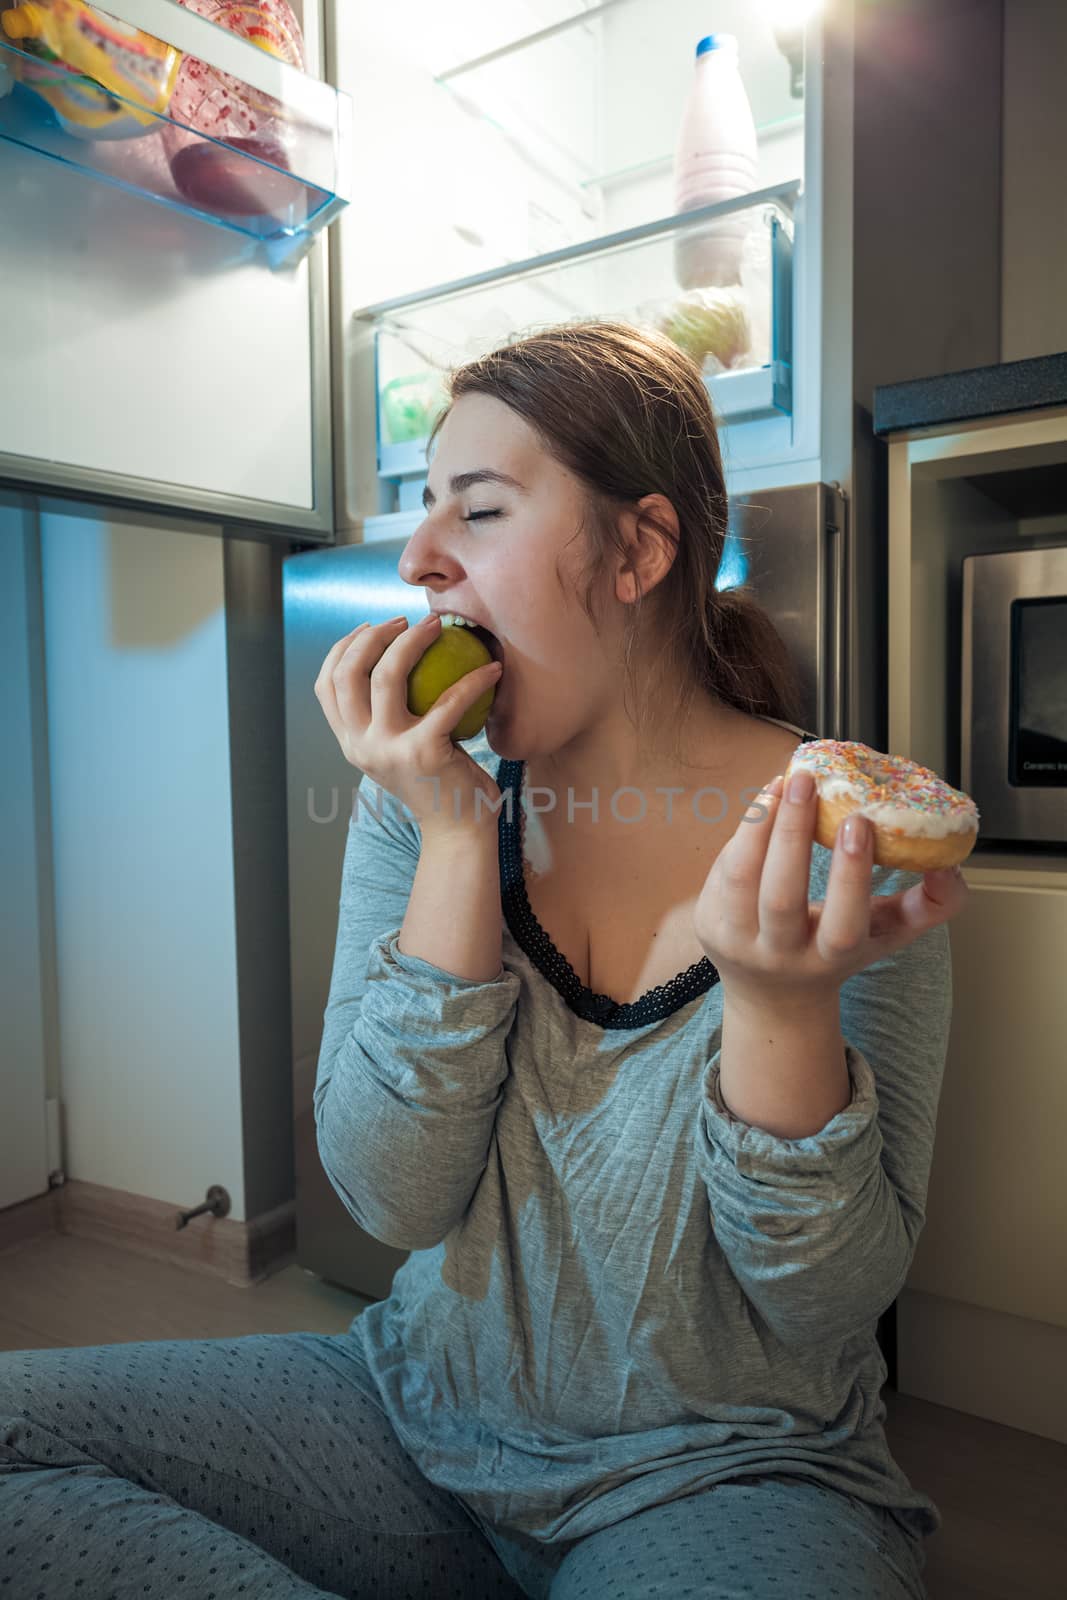 Closeup portrait of woman in pajamas biting apple at kitchen at night